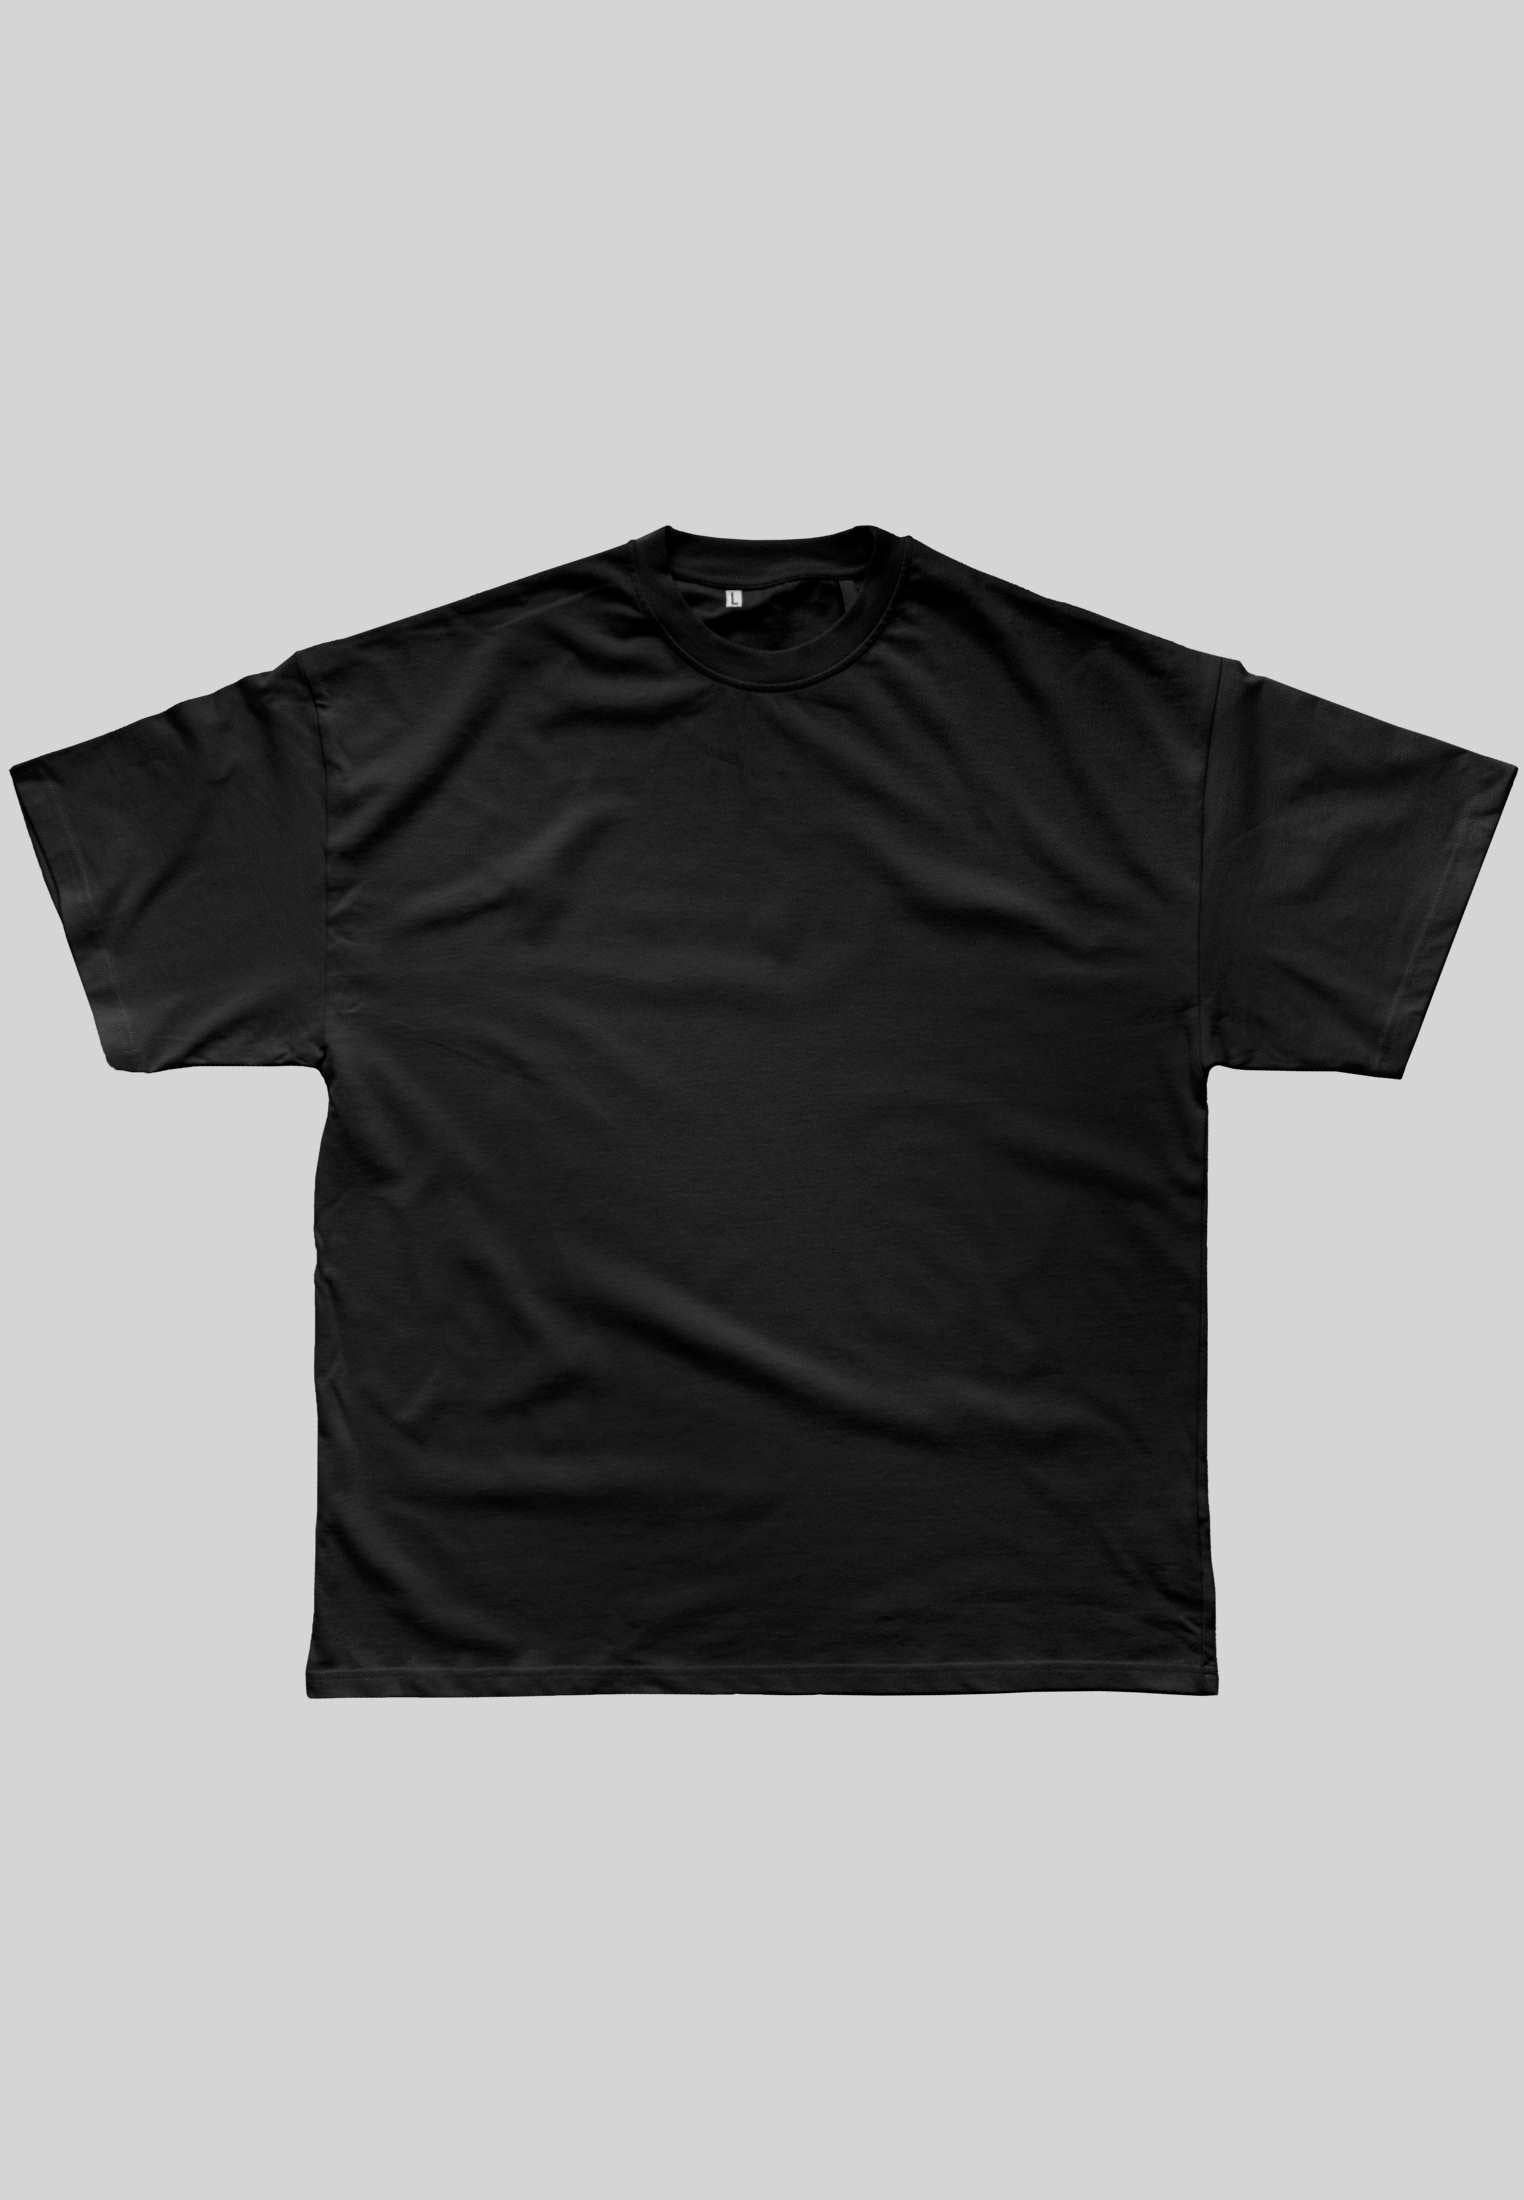 CV South Black Oversized T-Shirt